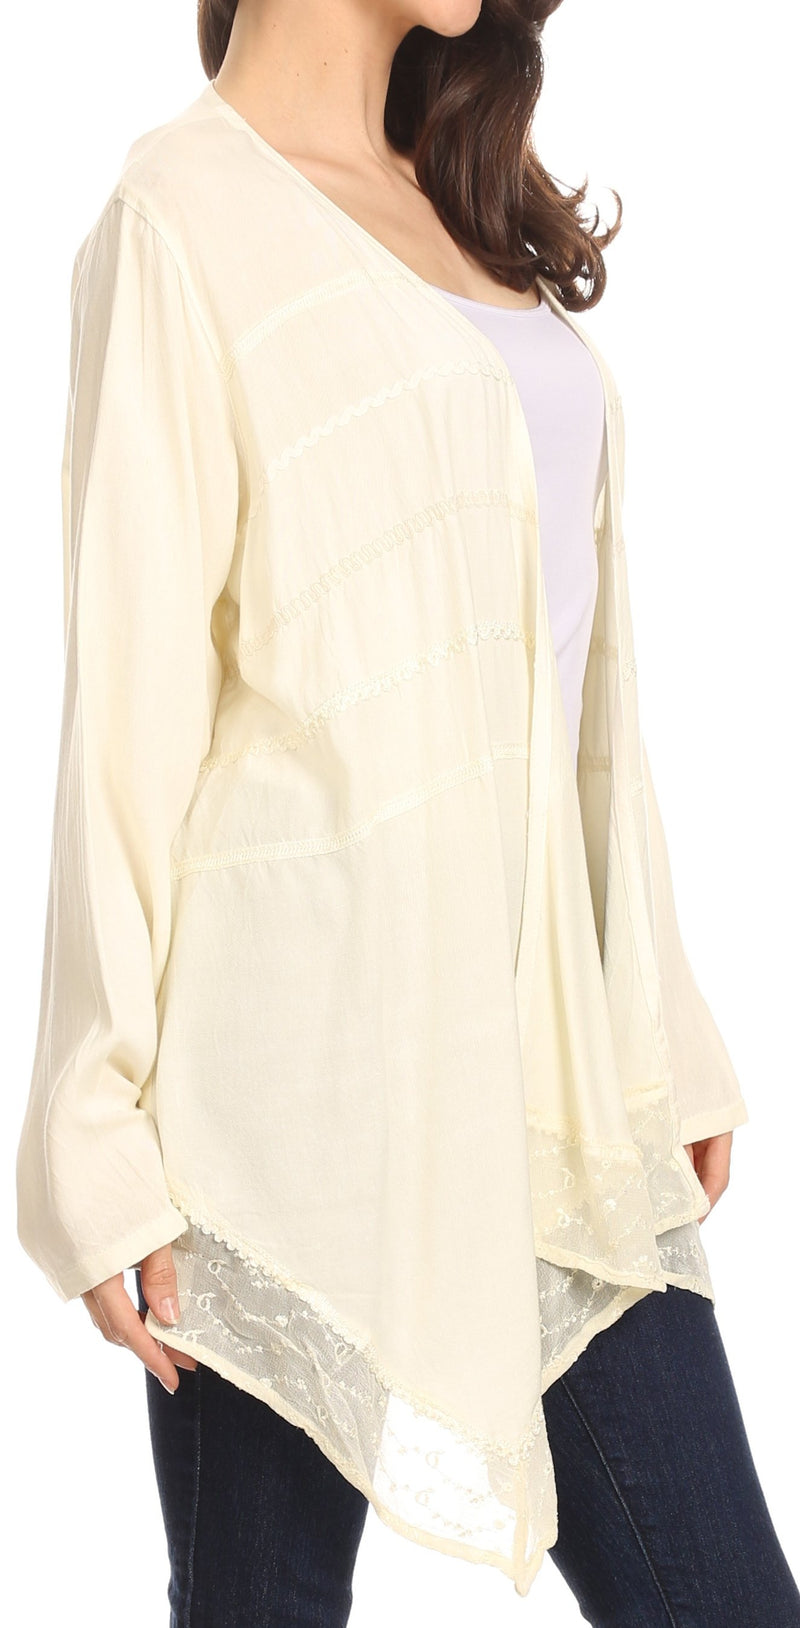 Sakkas Isenia Cardigan Open Front Kimono Long Sleeve Embroidered Top Blouse Lace